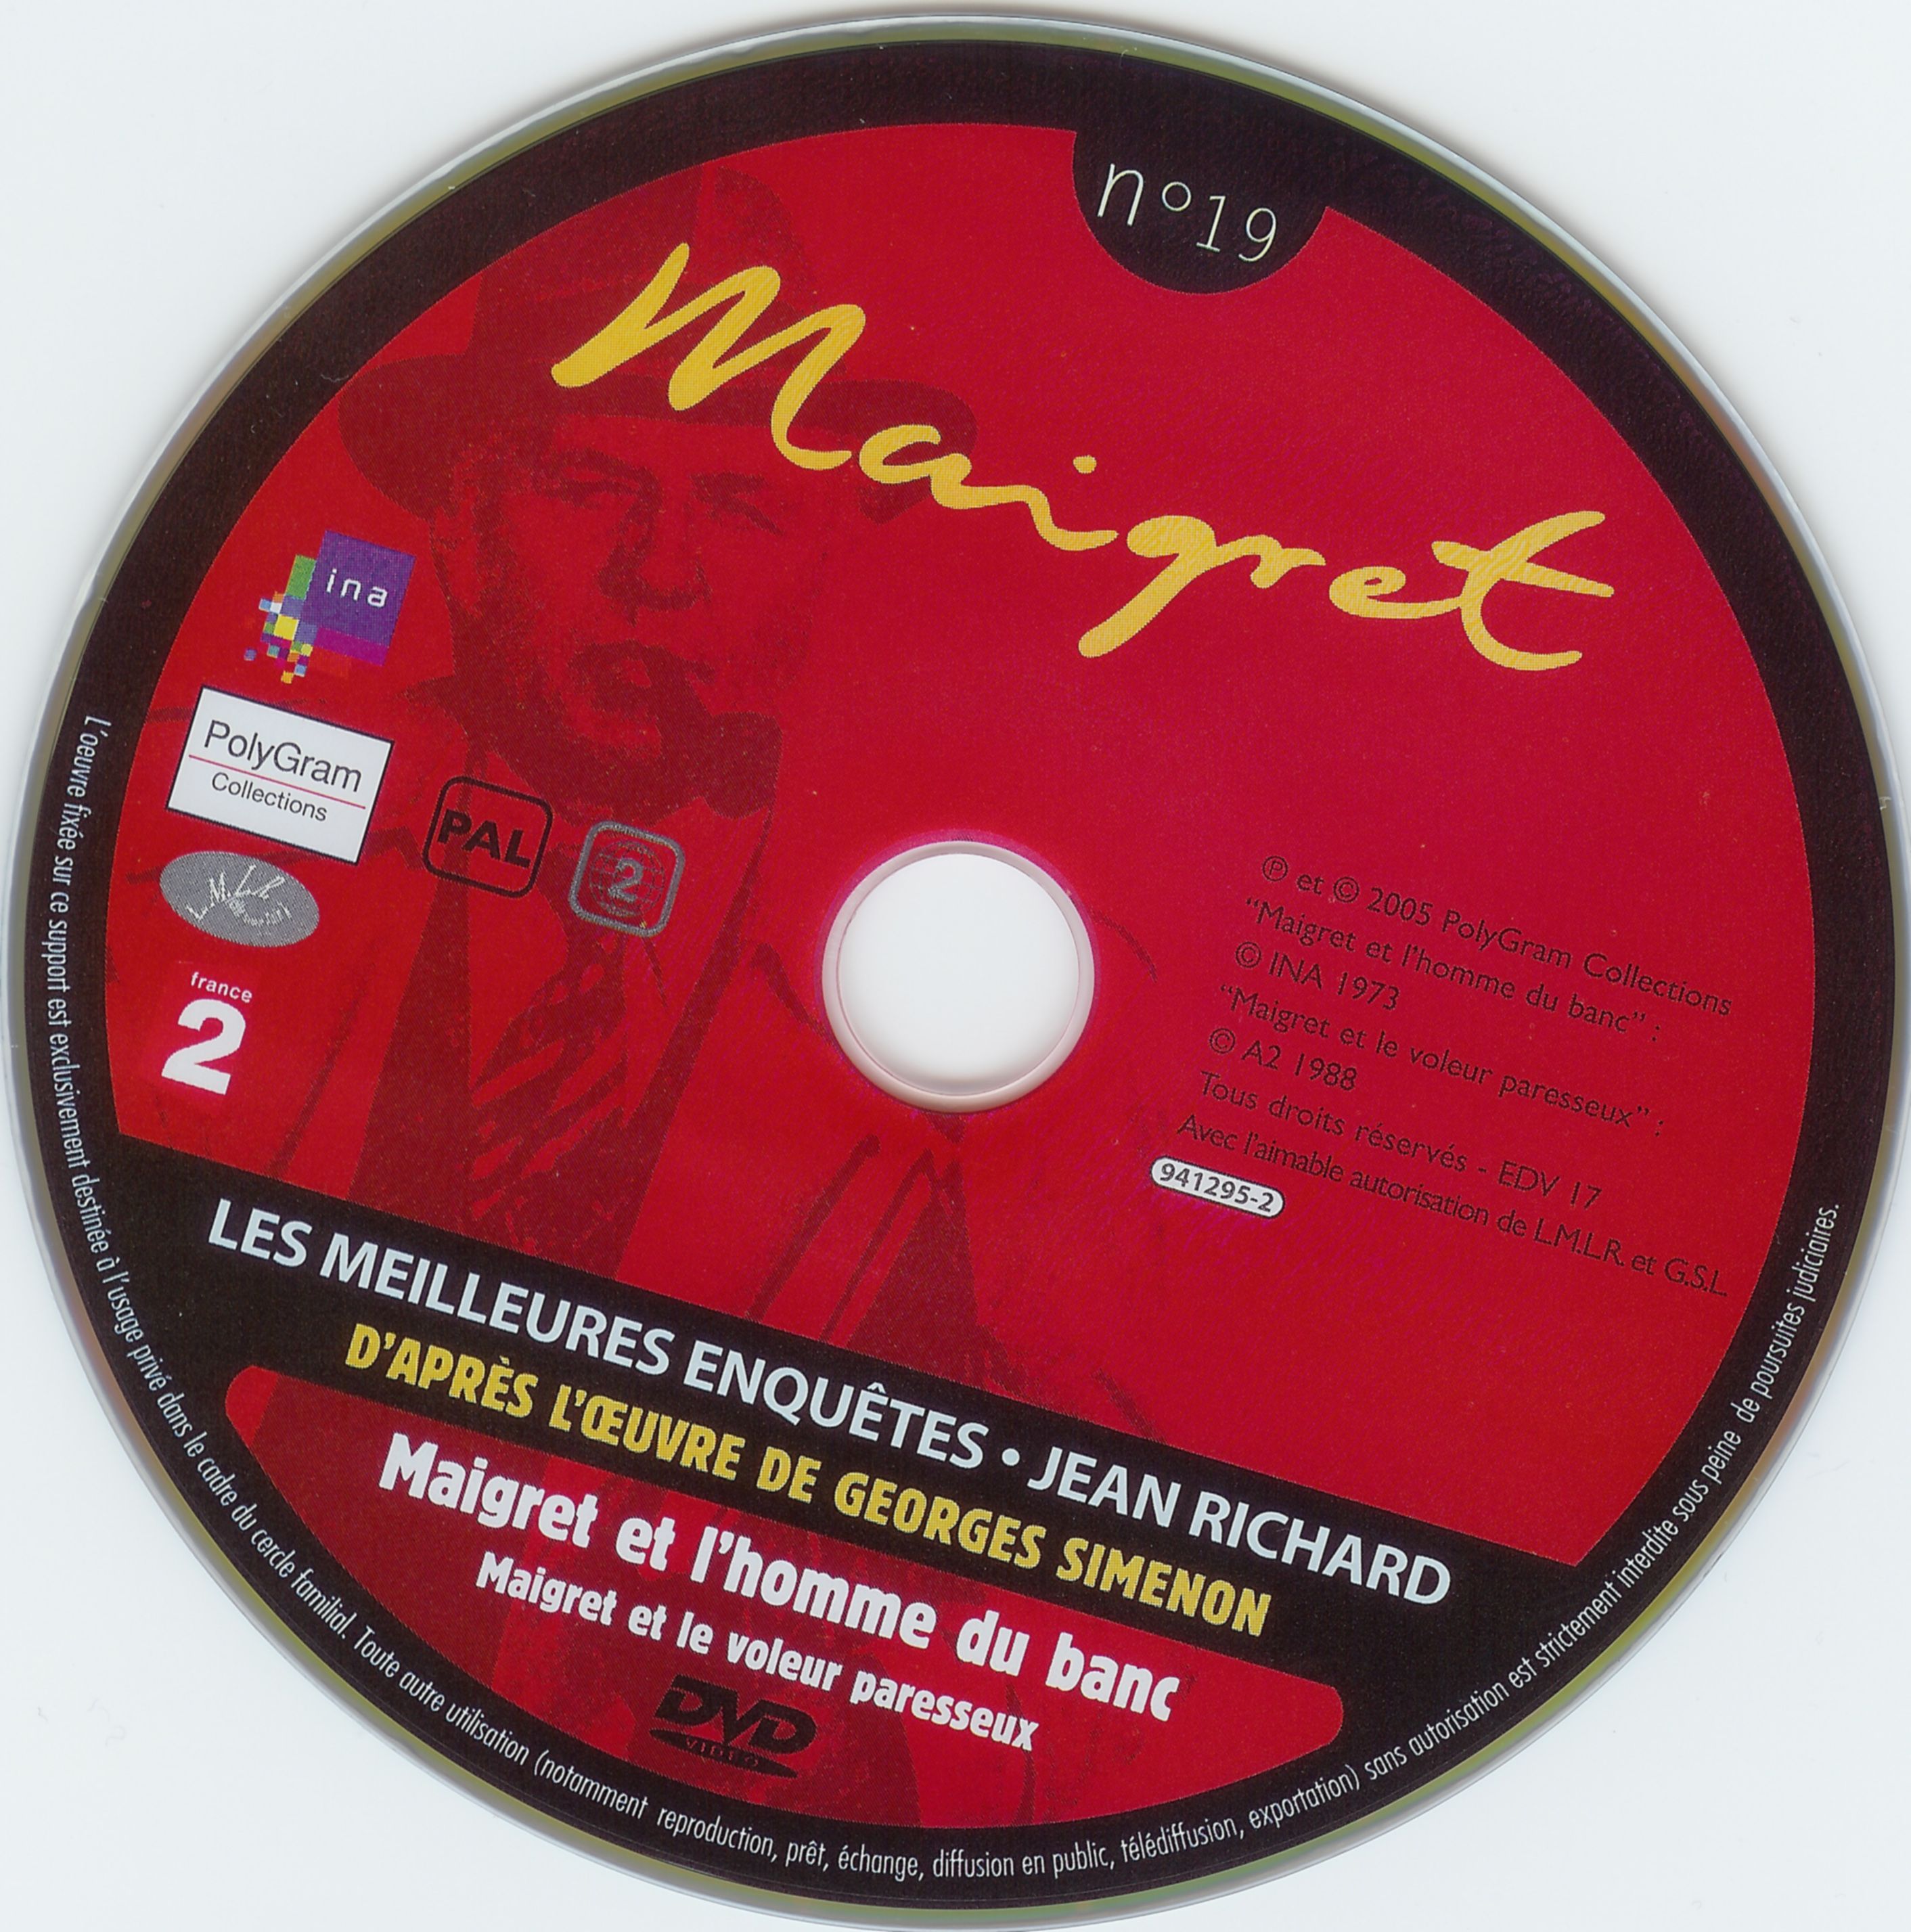 Maigret (Jean Richard) vol 19